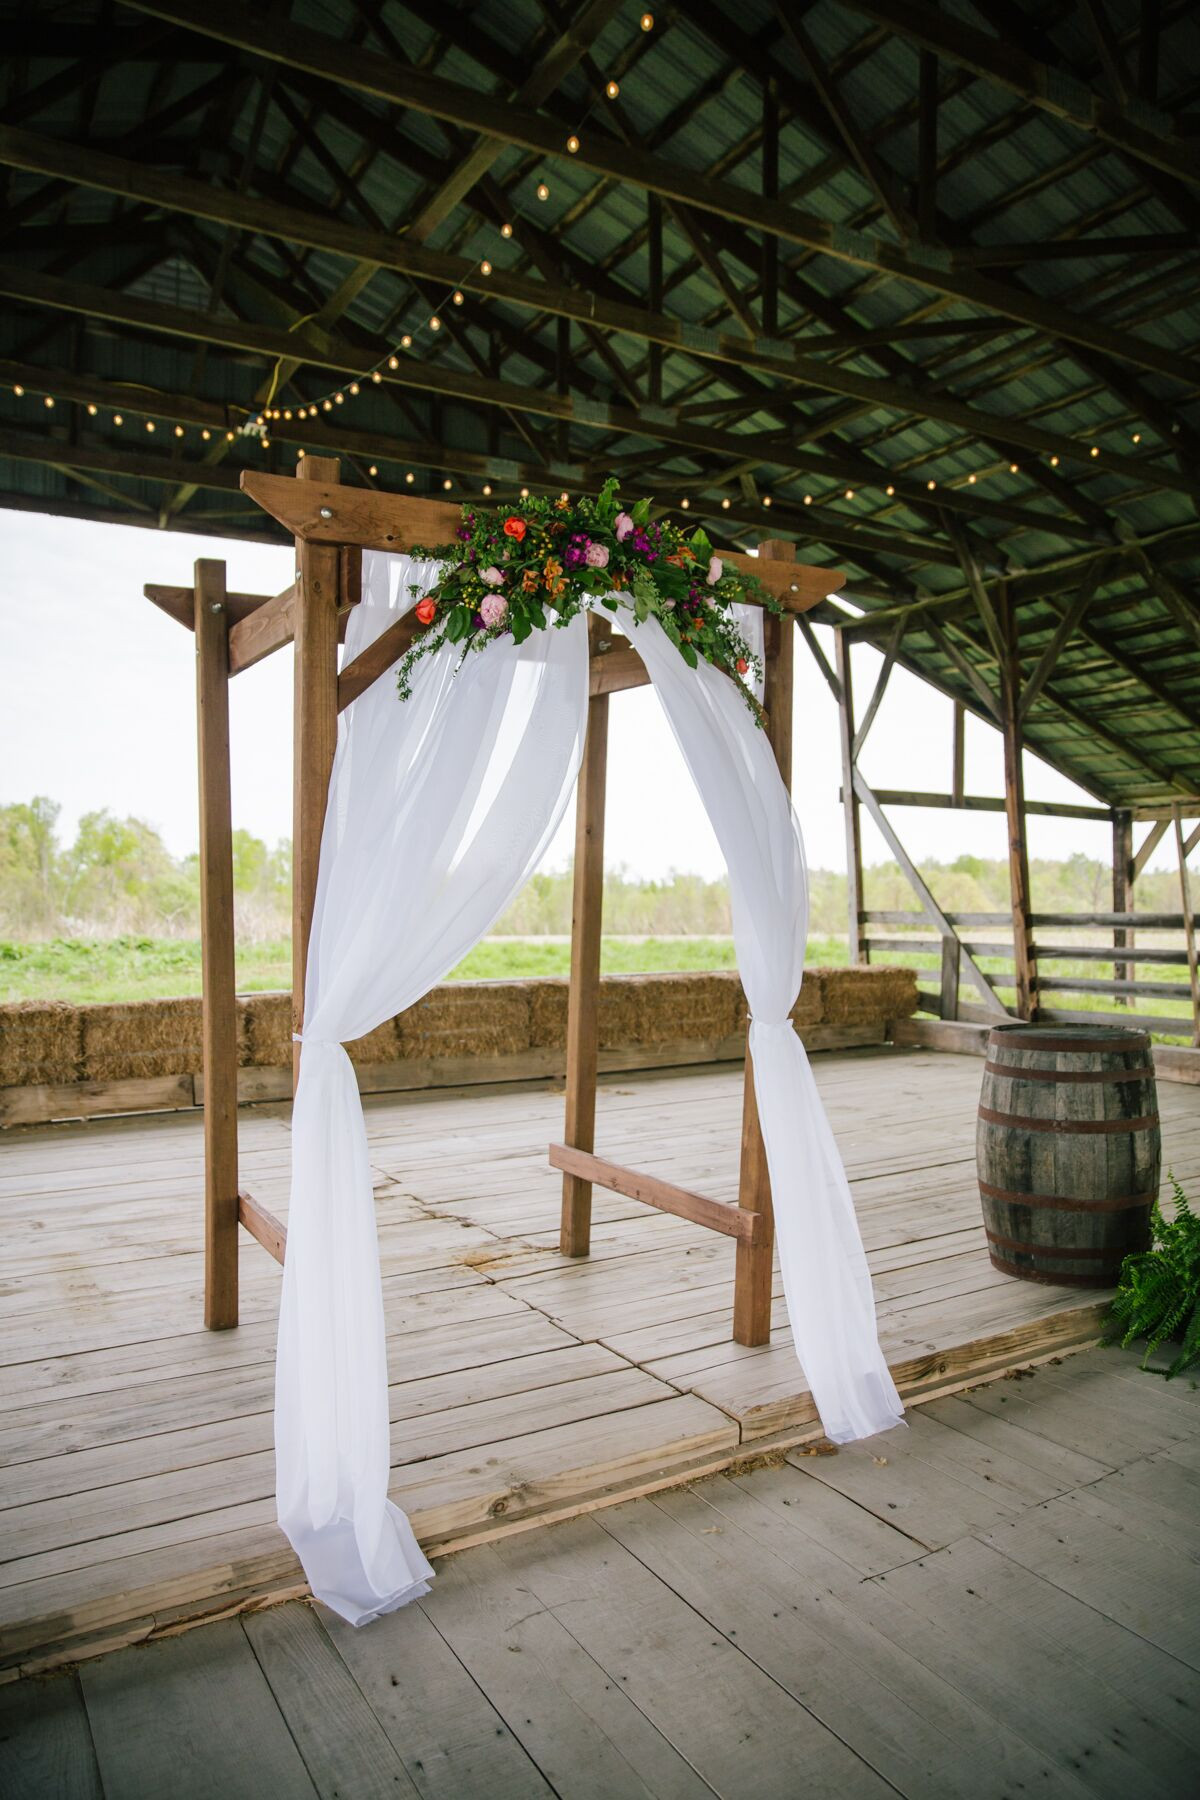 DIY Wedding Arches Ideas
 DIY Wooden Wedding Arch With Colorful Flowers